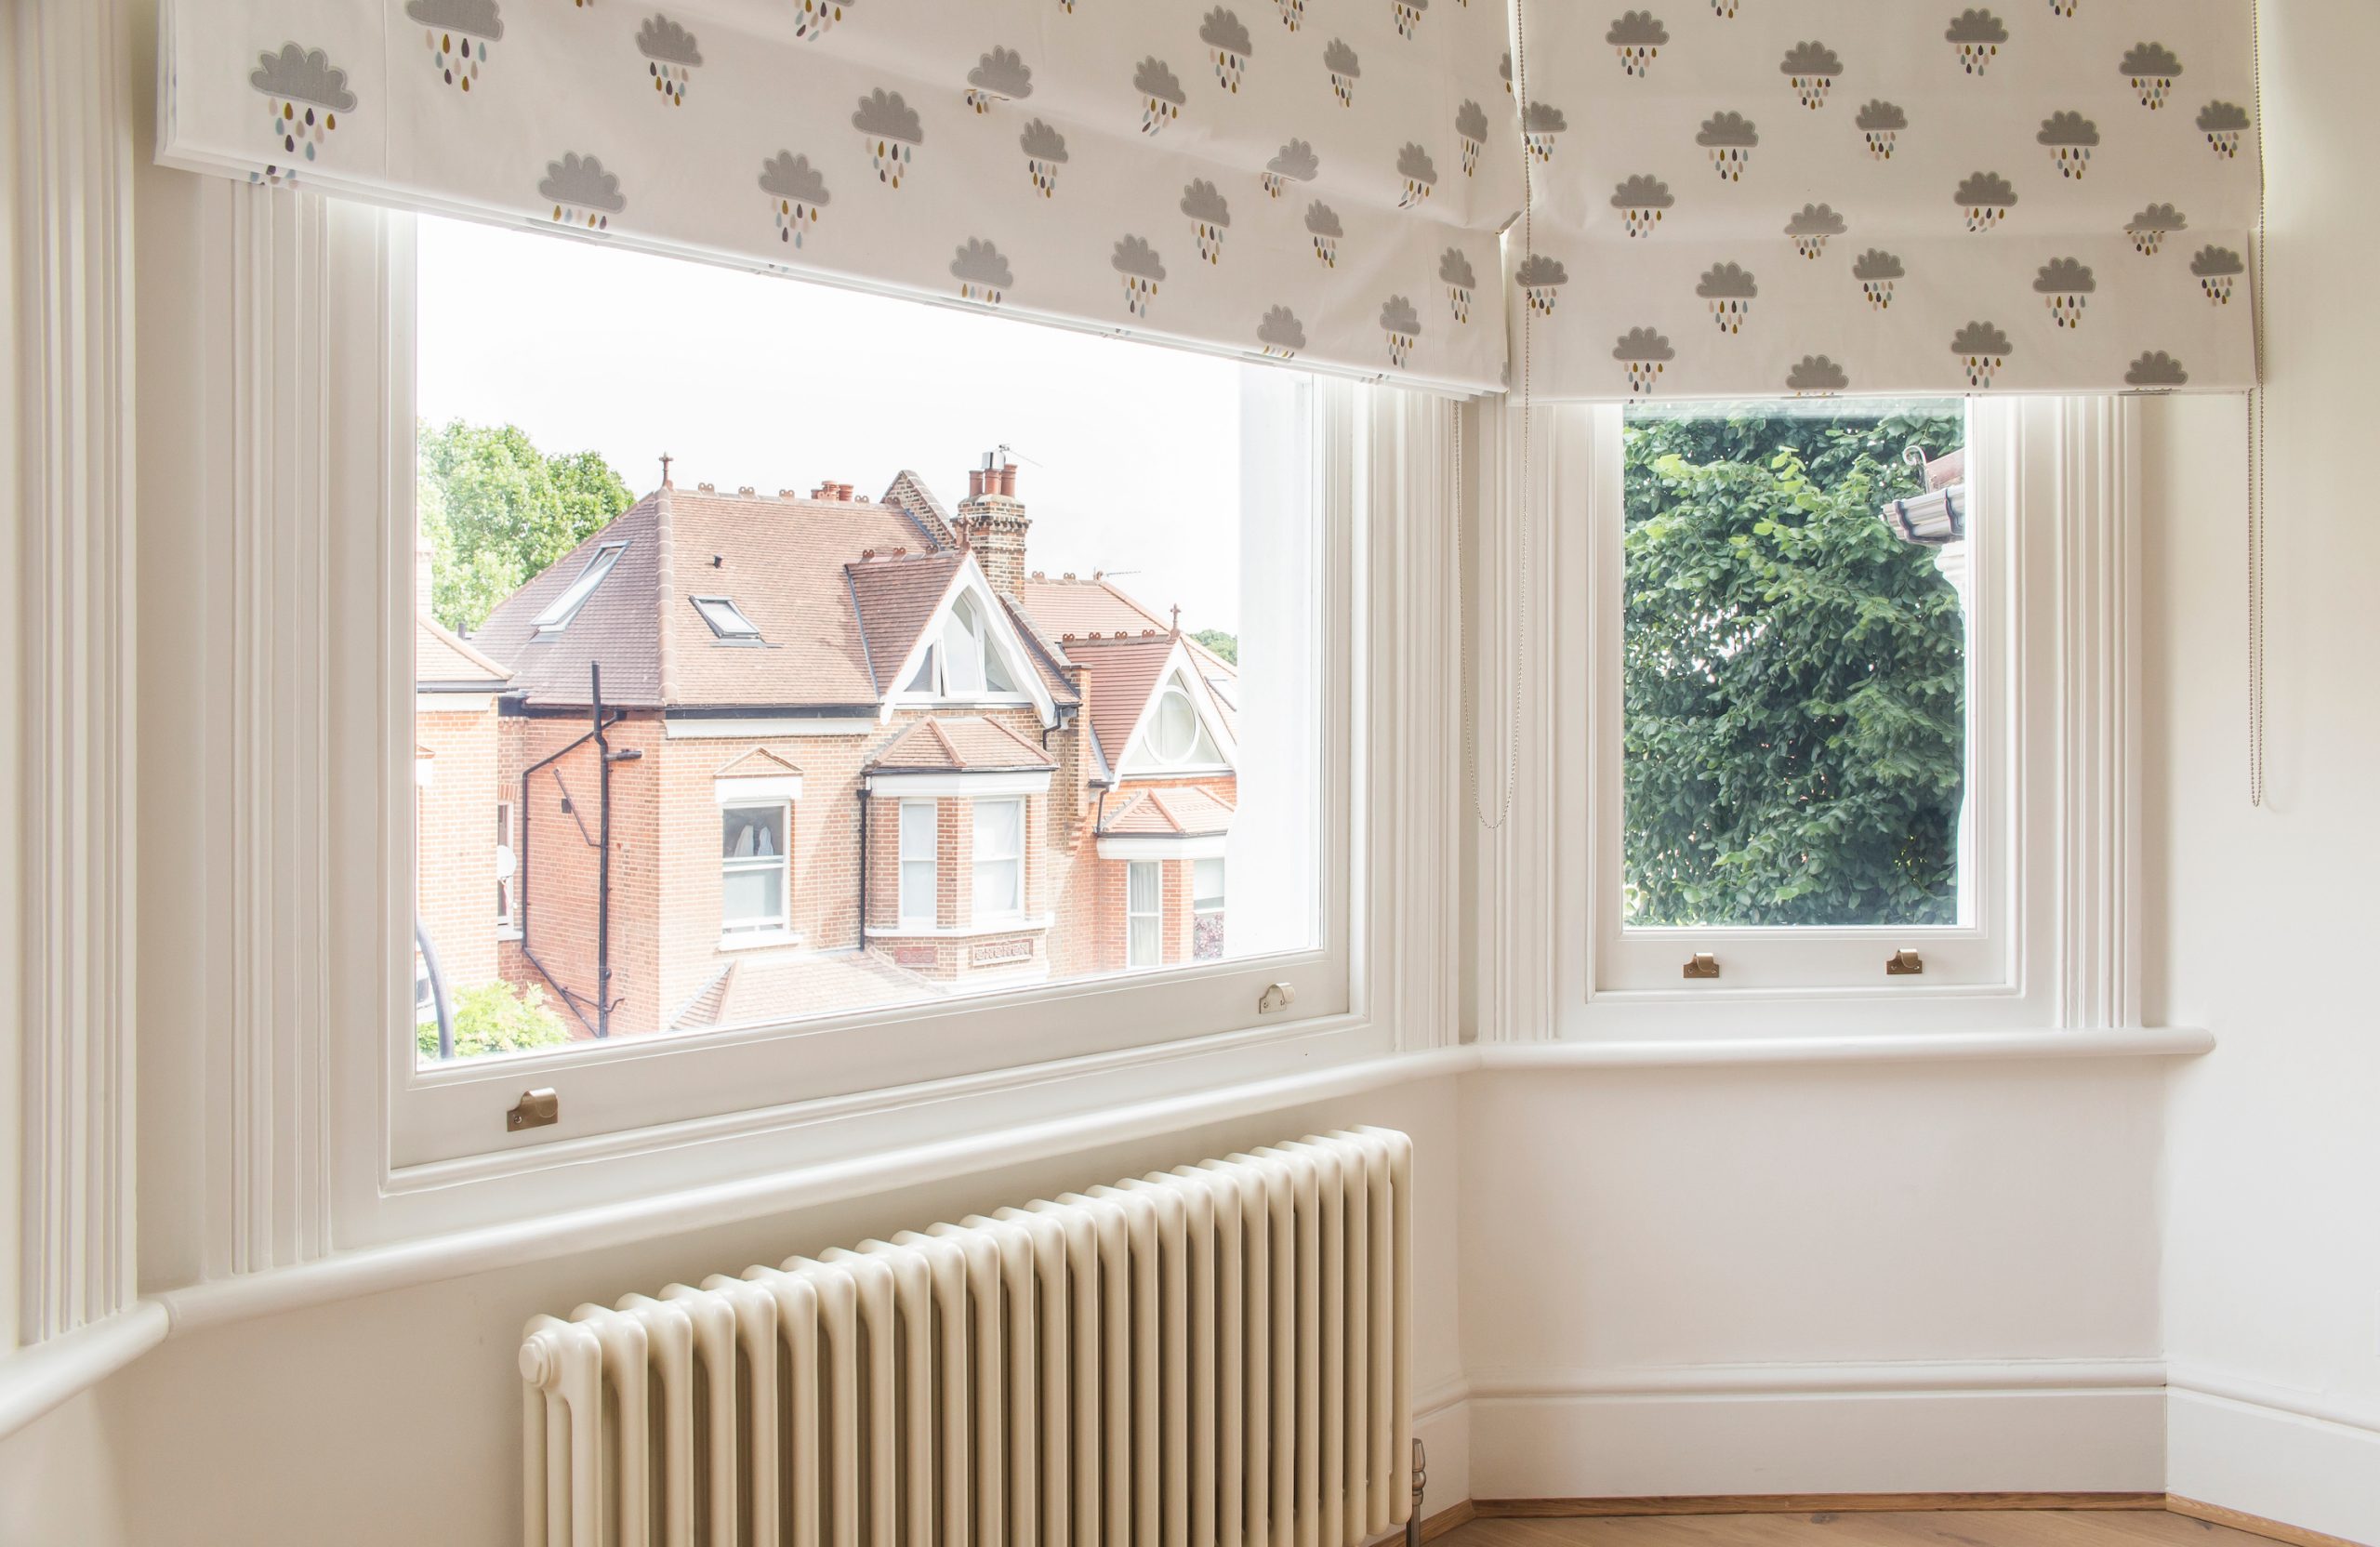 Edwardian Townhouse - bay window kids bedroom radiator and blinds details